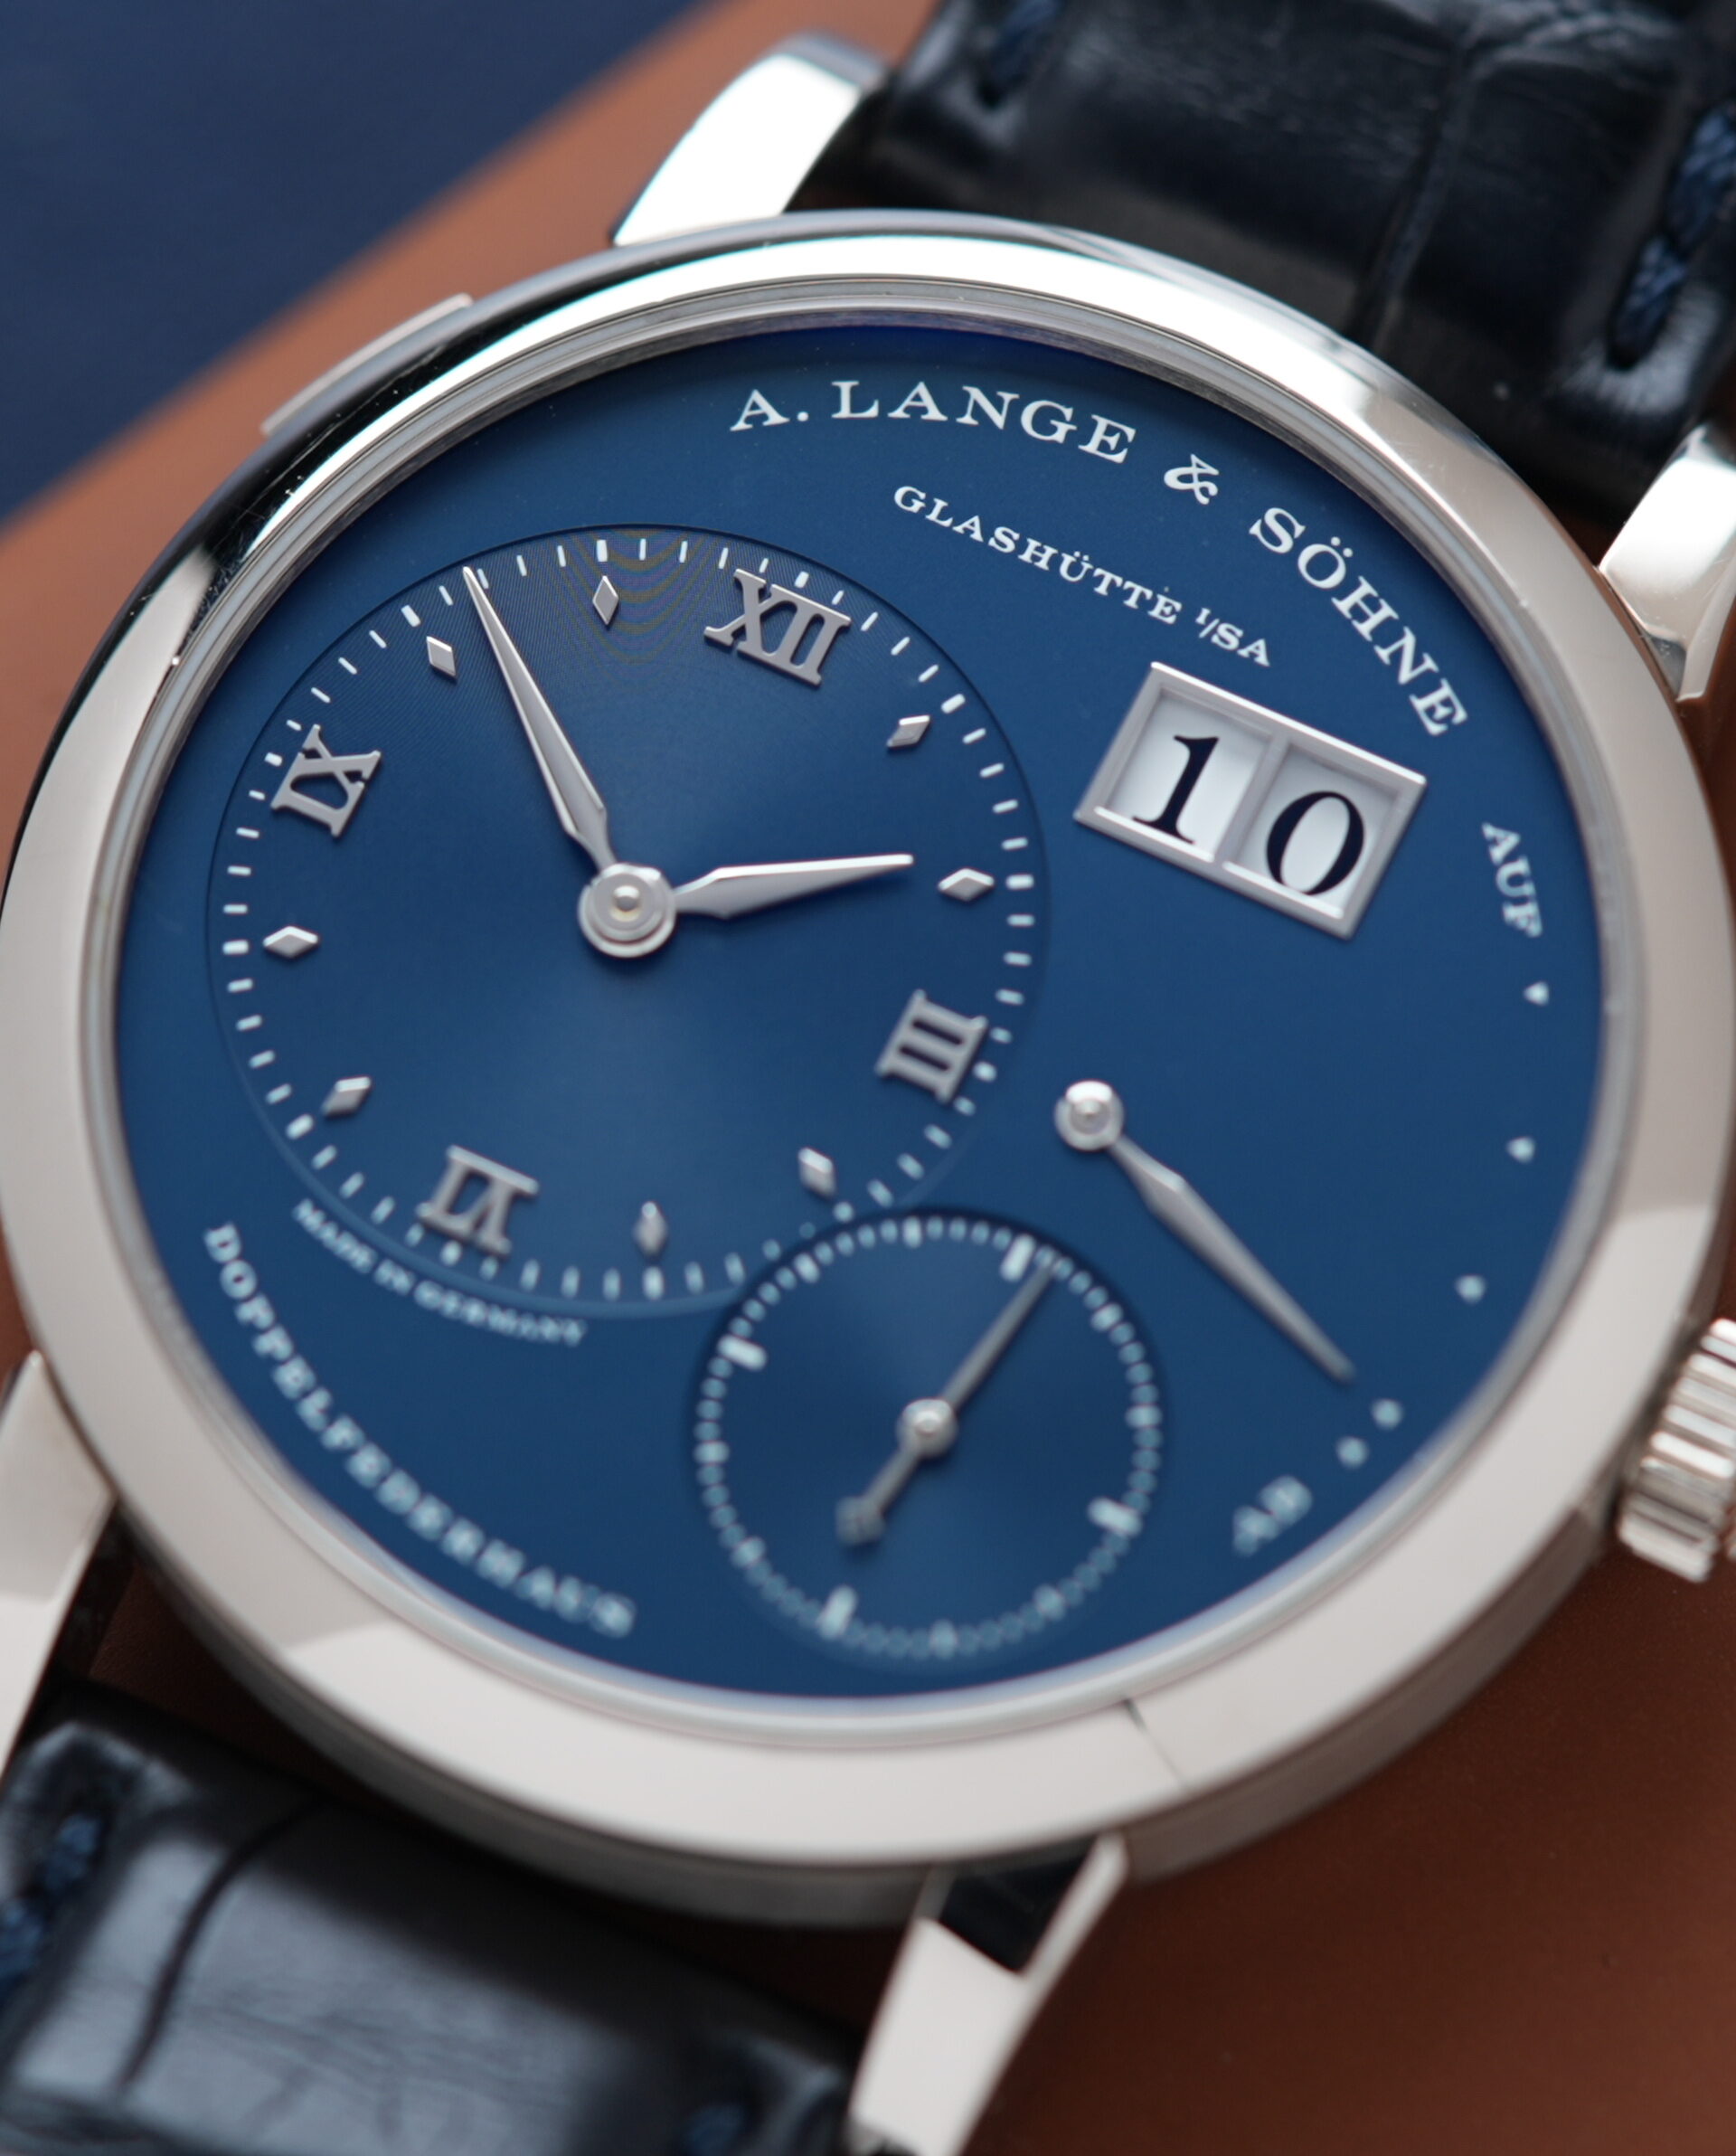 A. Lange & Söhne Lange 1 'Blue Series' 191.028 White Gold watch angled shot.